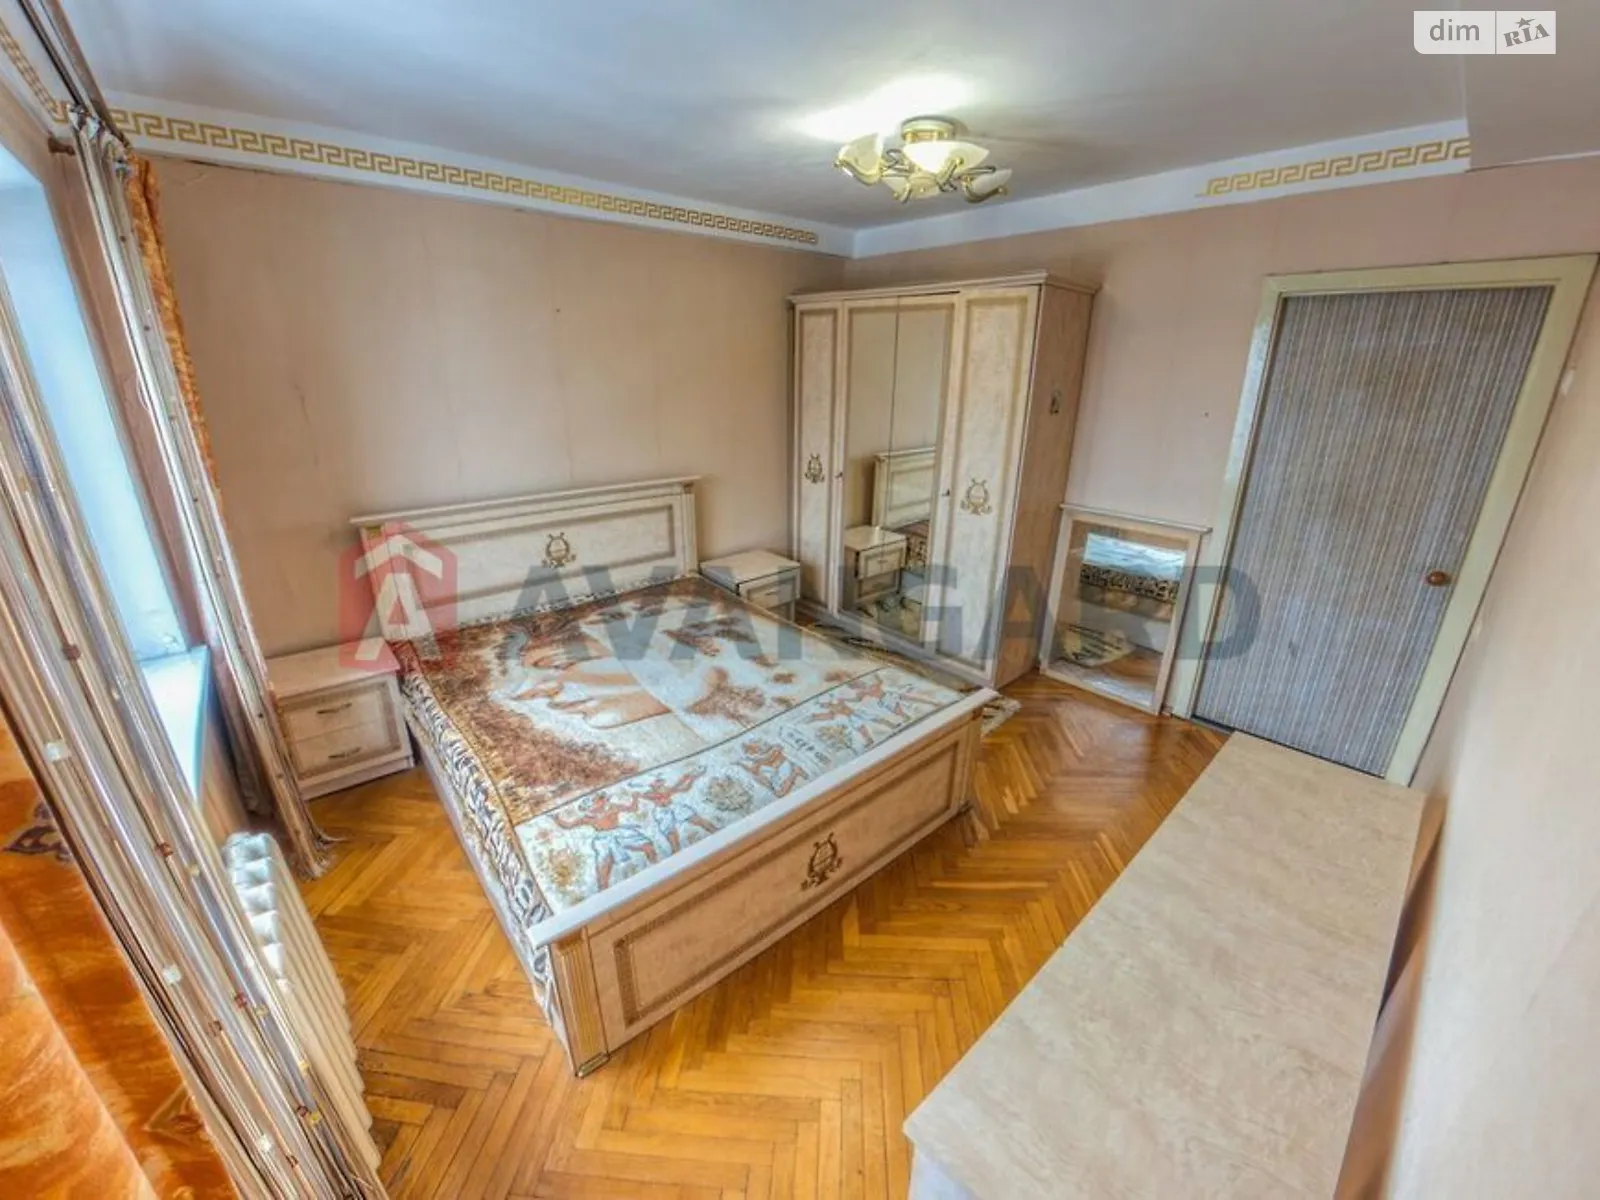 Продается комната 45 кв. м в Киеве, цена: 42500 $ - фото 1